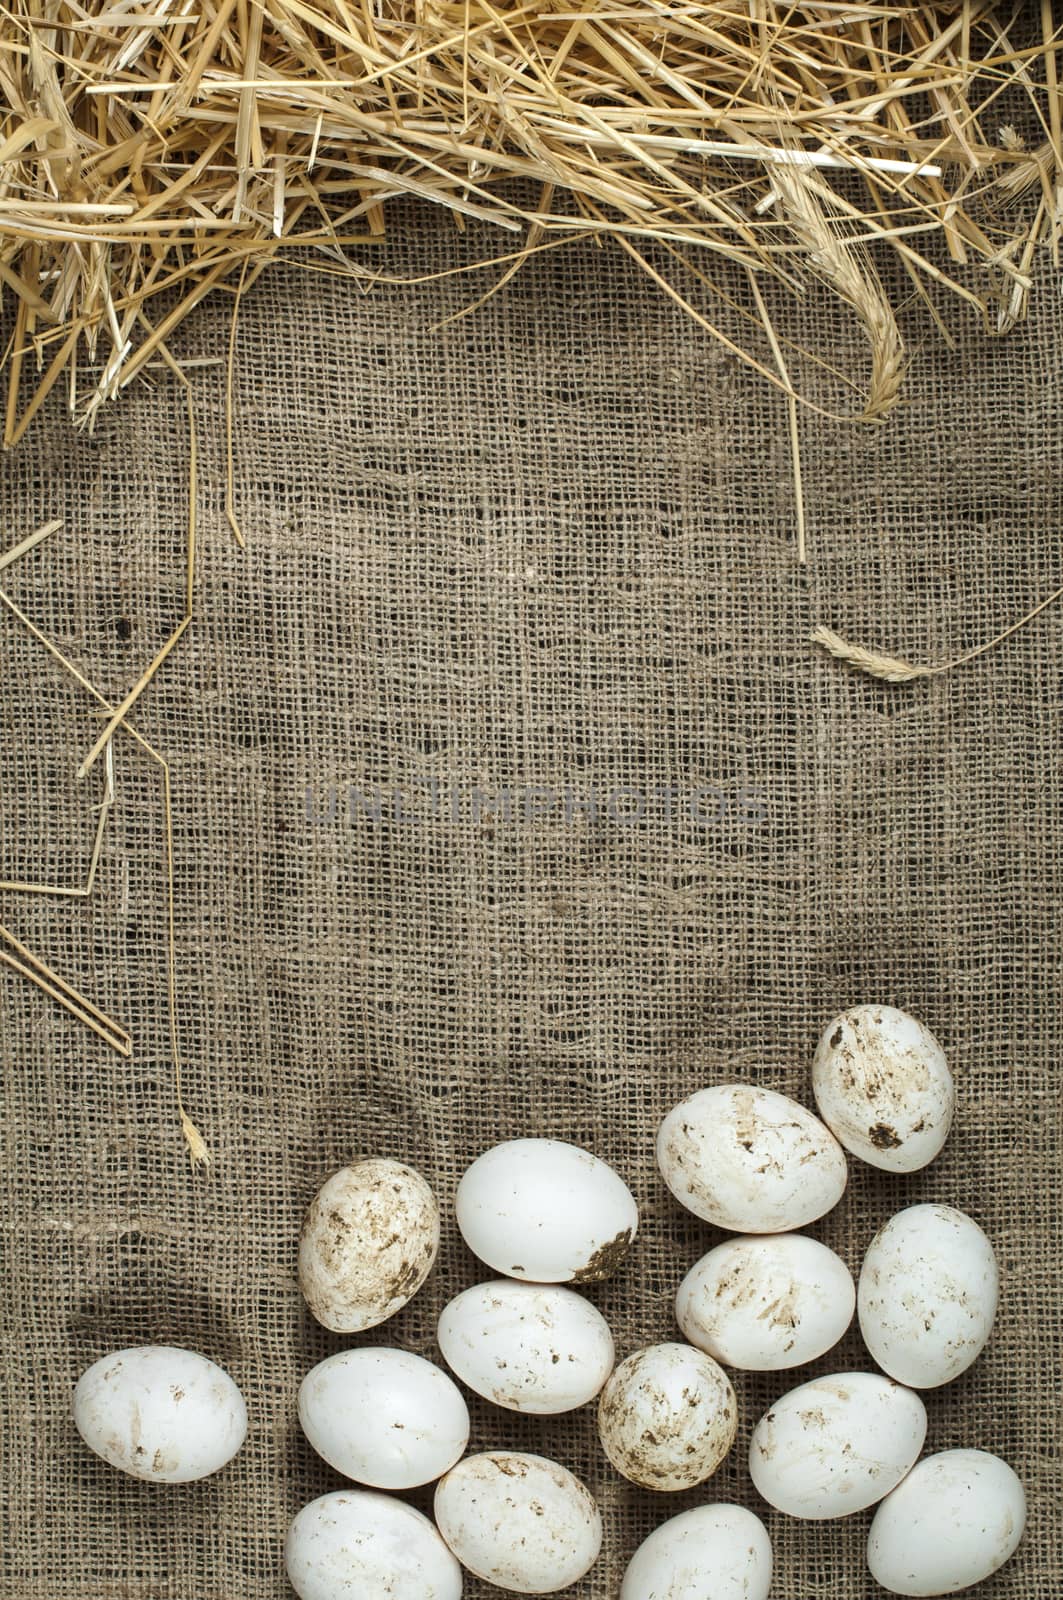 Organic white domestic eggs on sackcloth and straw by deyan_georgiev